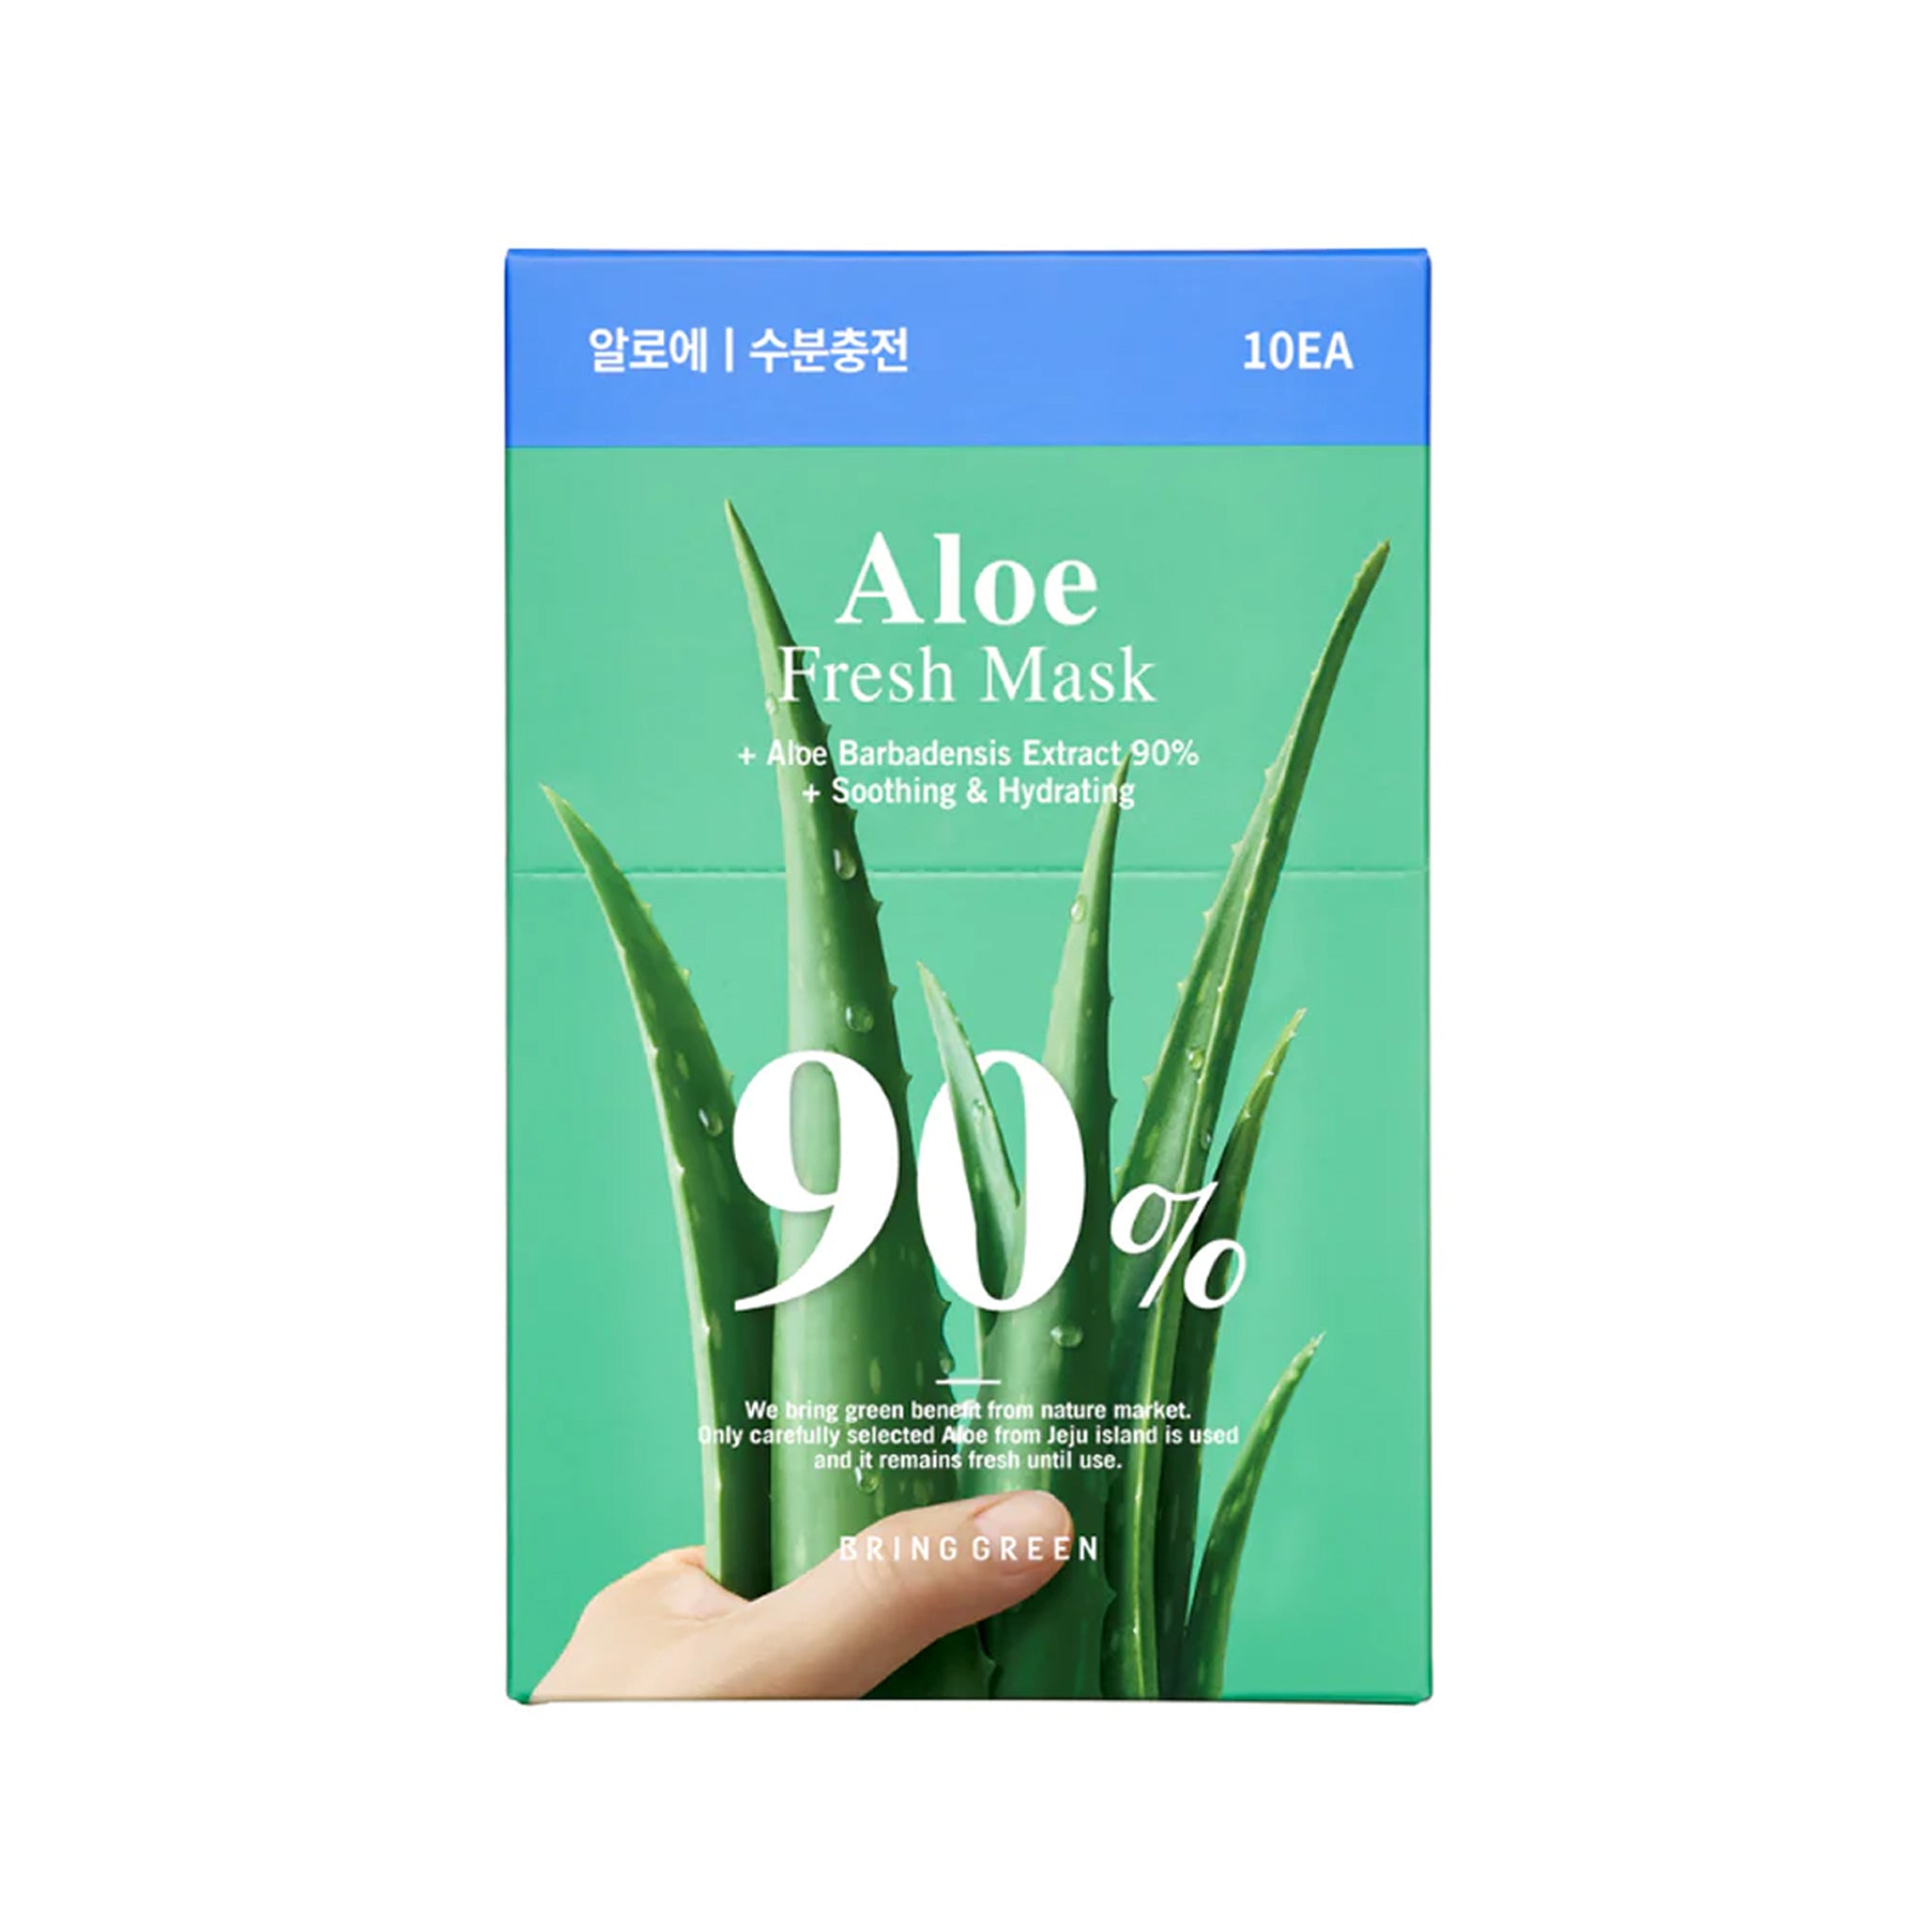 BRINGGREEN Aloe 90% Fresh Mask